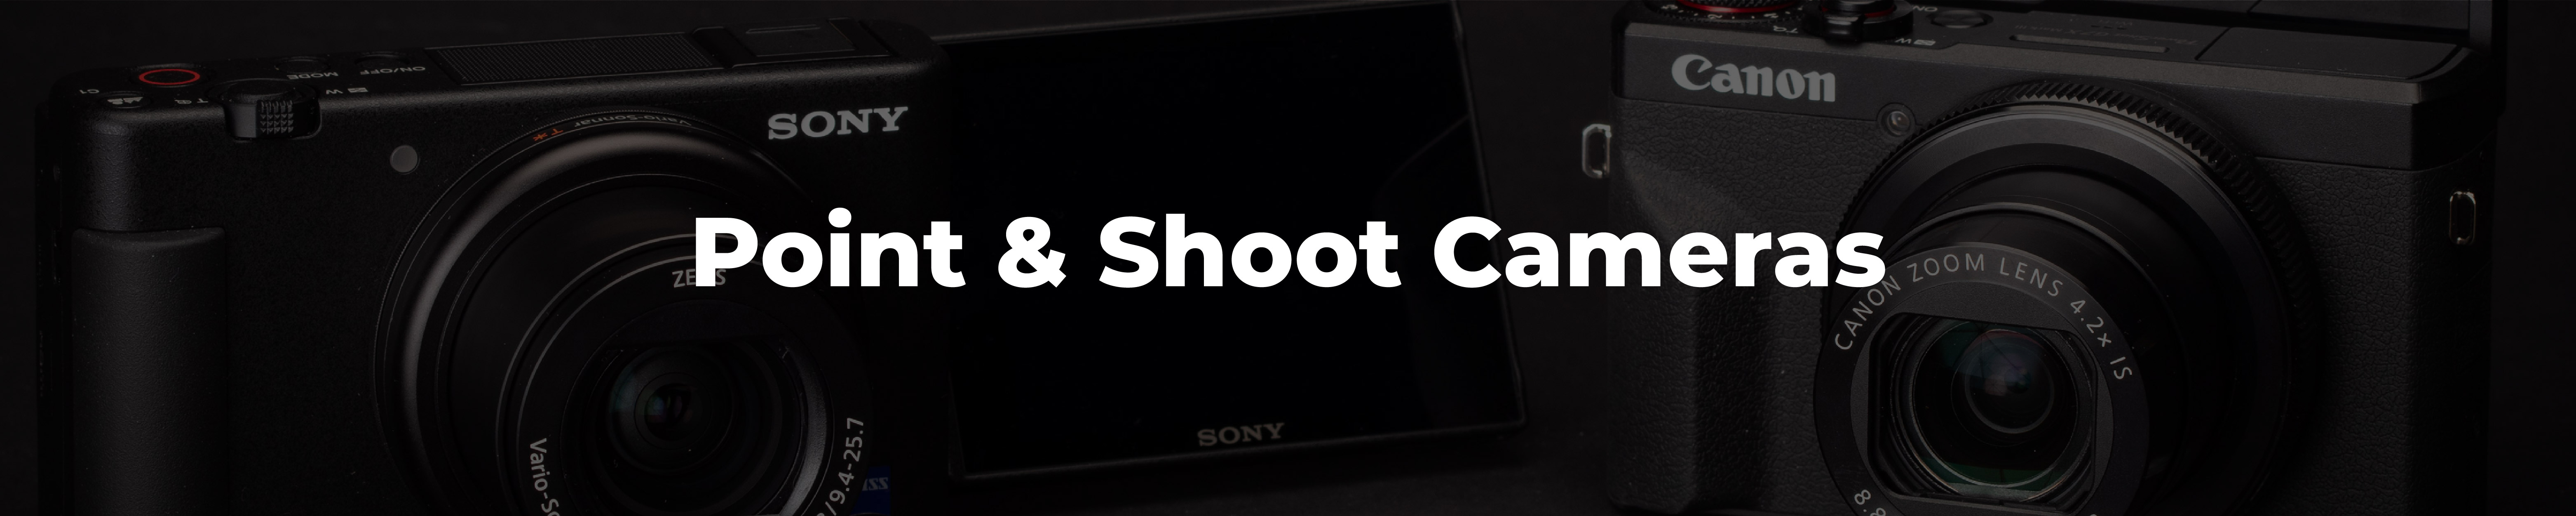 Point & Shoot Cameras